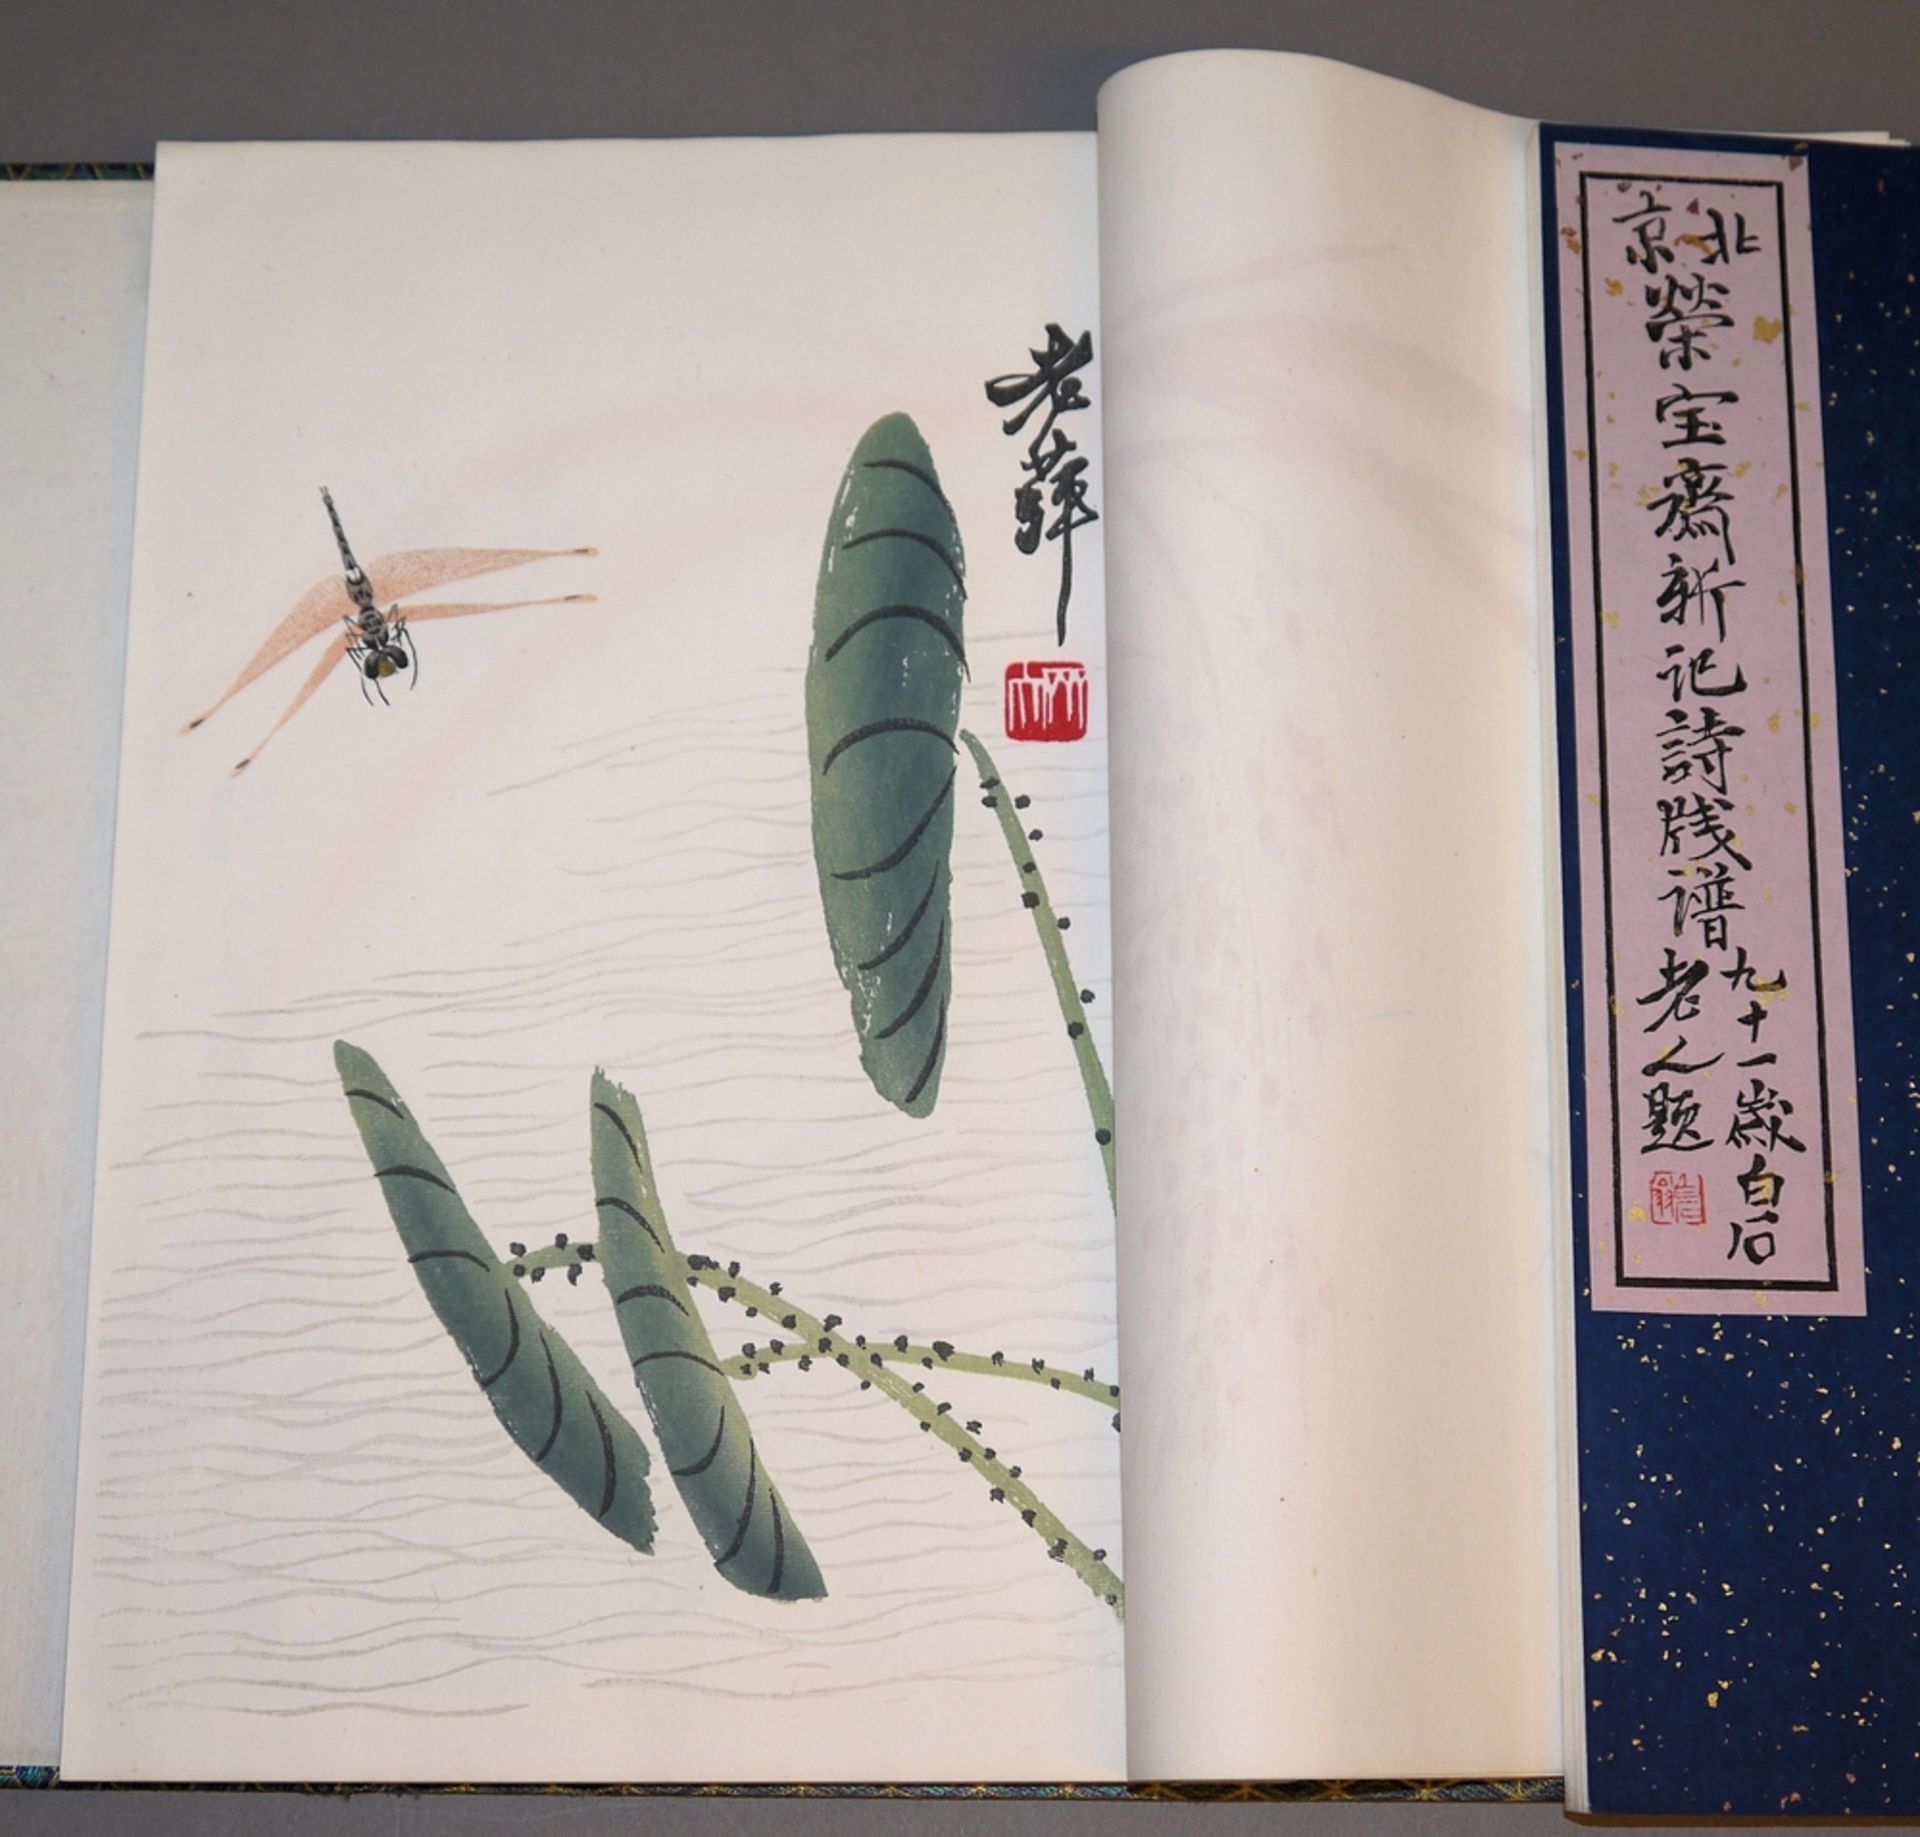 Shi Jianpu, die "Briefpapier-Sammlung", Verlag Rong Bao Zhai, Peking 1955 - Image 2 of 5